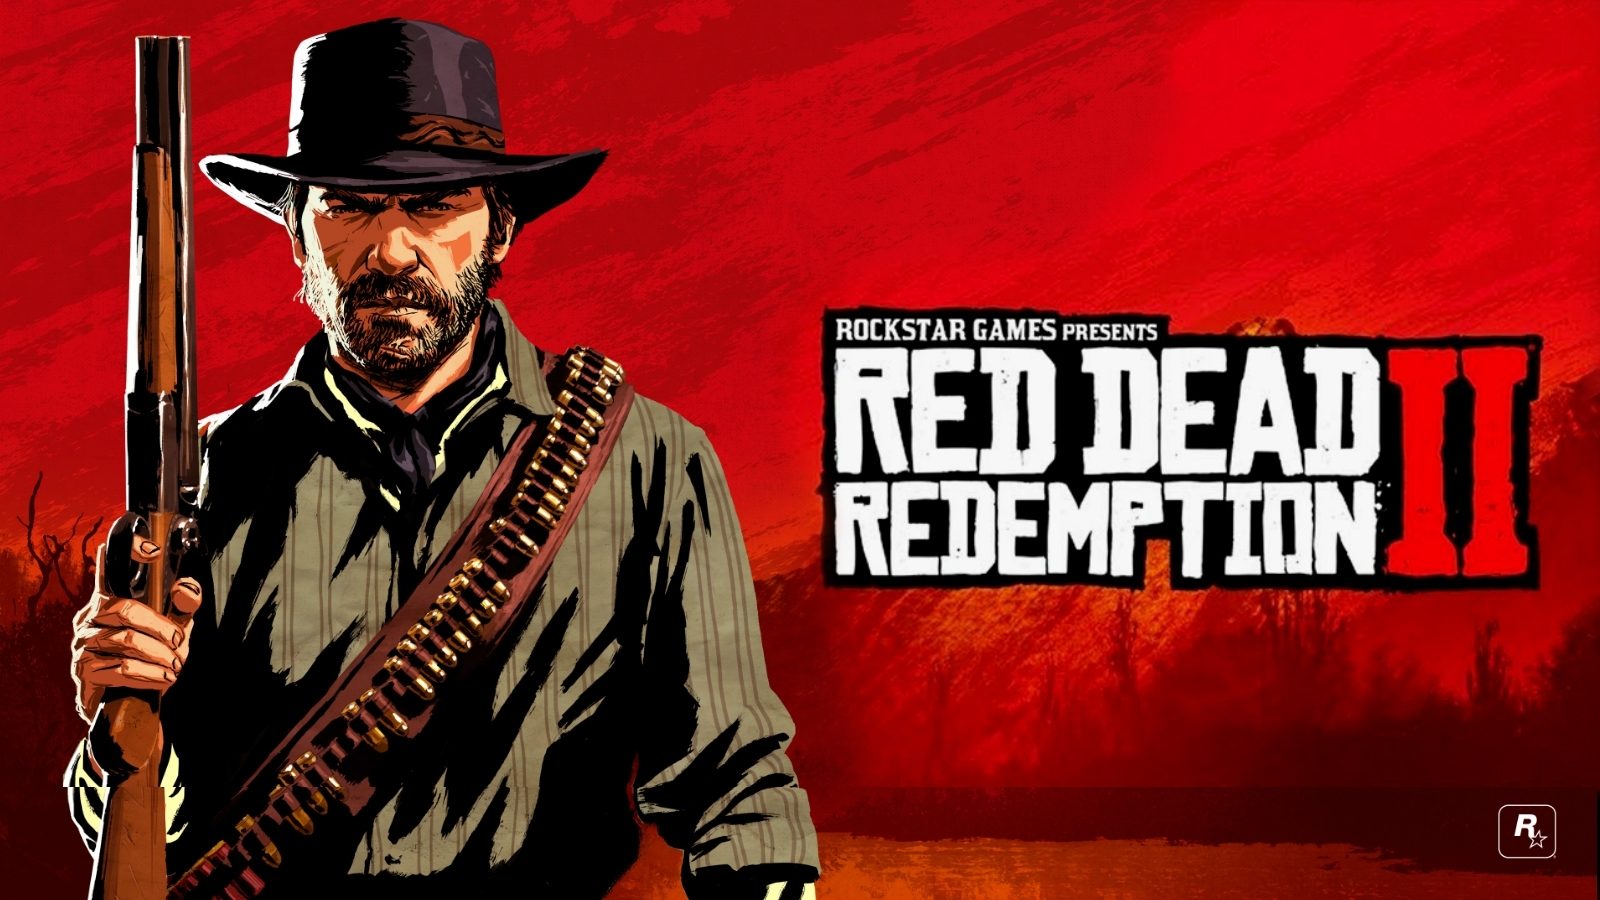 Red Dead Redemption 2 Steam Surumu Ile Karsimizda Donanim Gunlugu